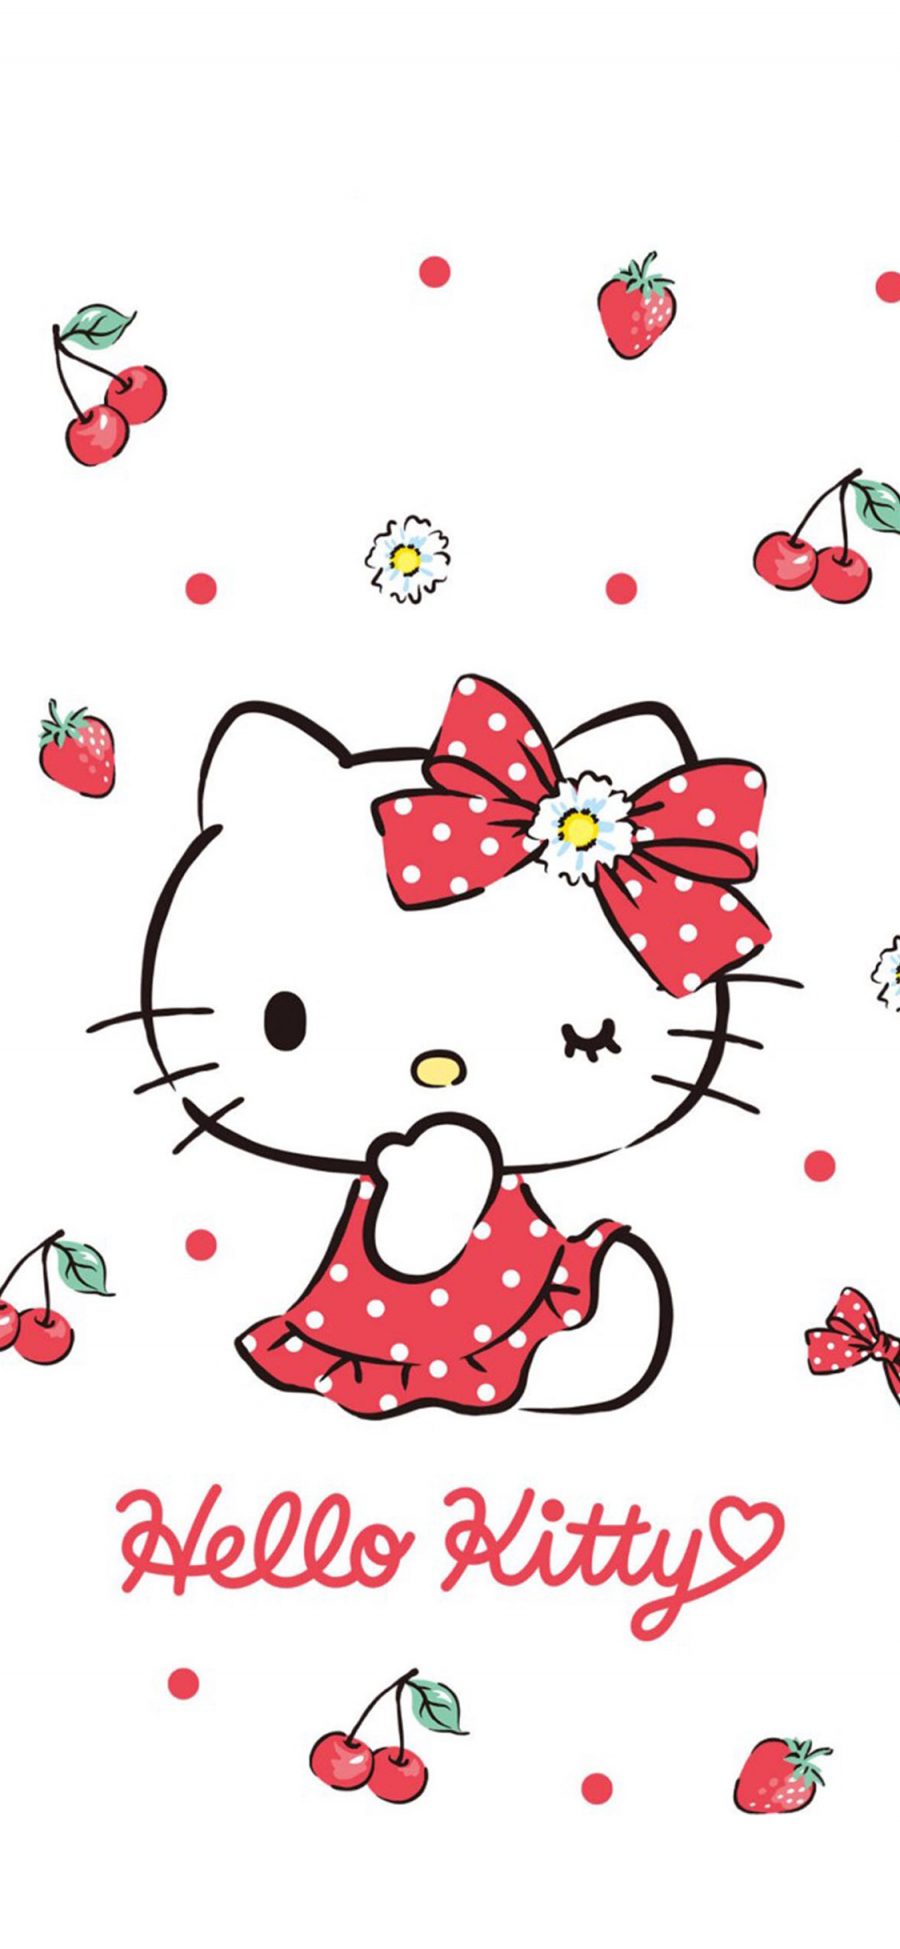 [2436×1125]Hello kitty 动画 樱桃 可爱 苹果手机动漫壁纸图片